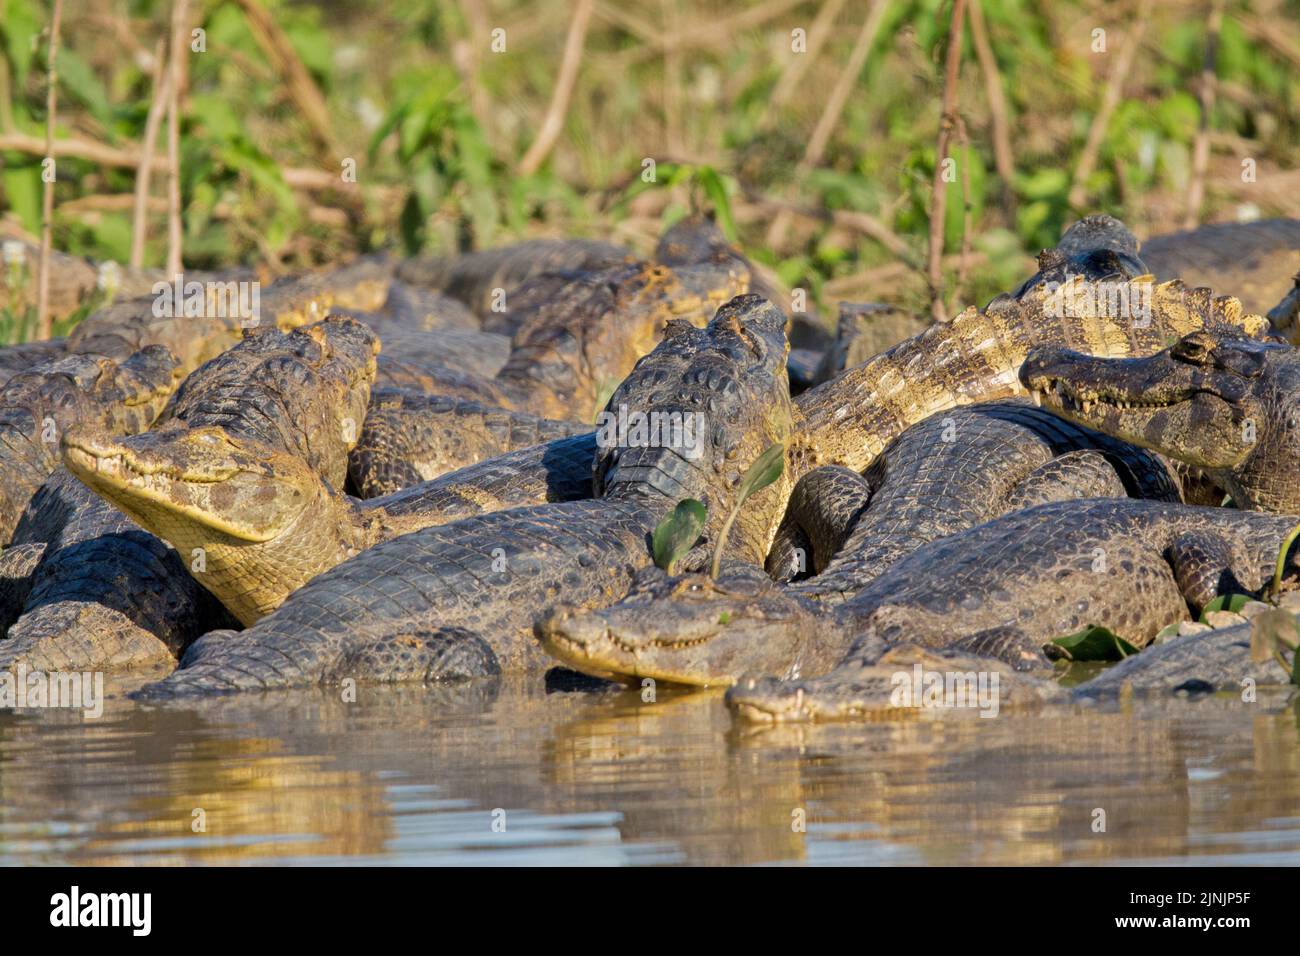 spectacled caiman (Caiman crocodilus), group at shore, Brazil, Pantanal Stock Photo